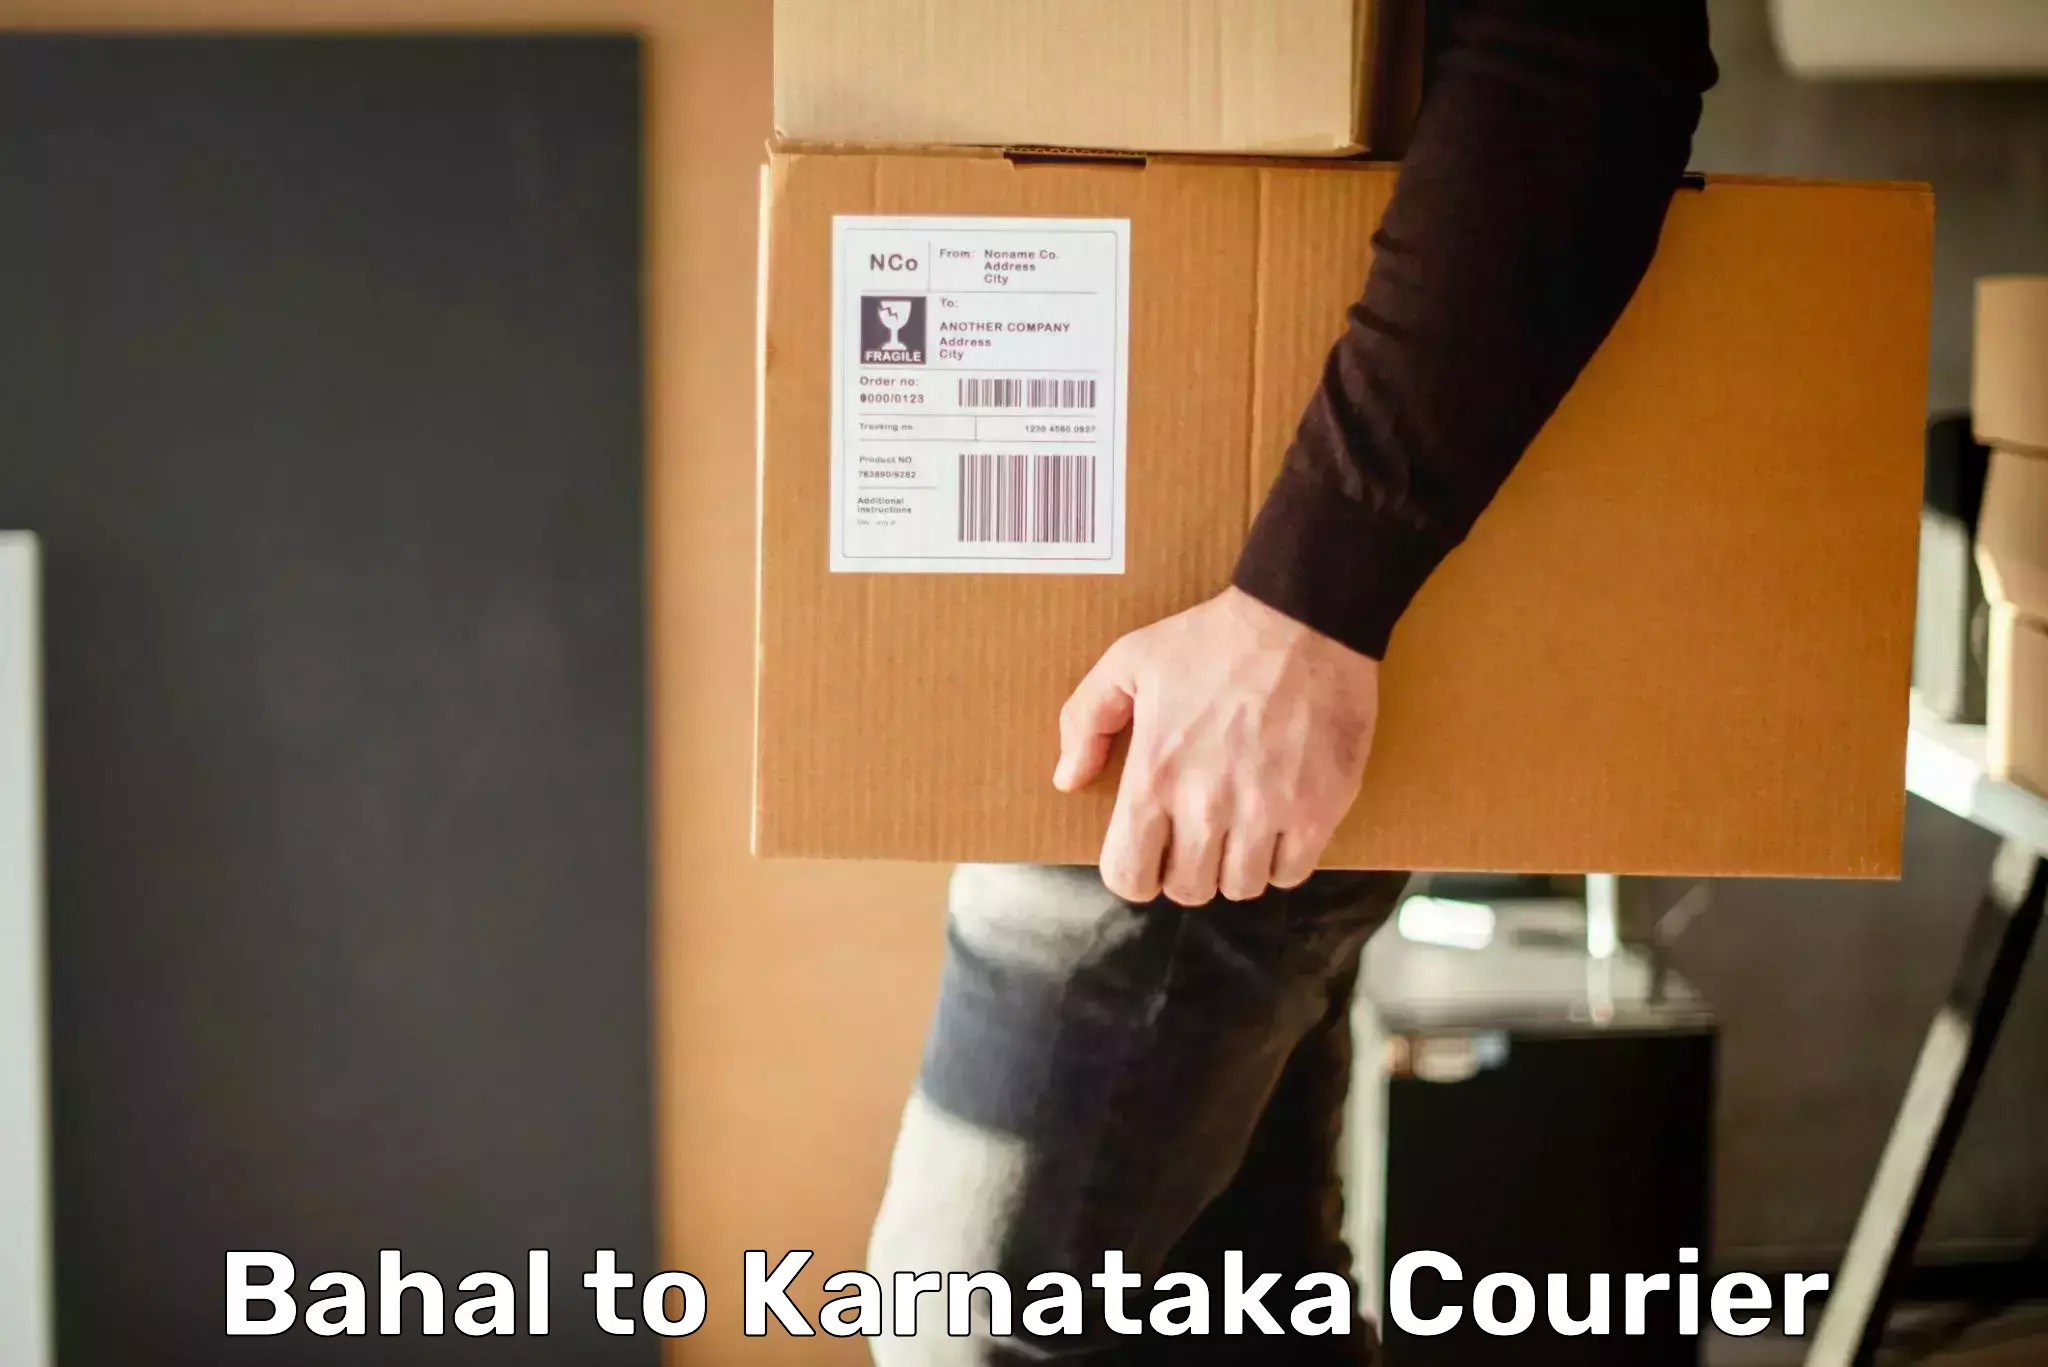 Subscription-based courier Bahal to Karnataka